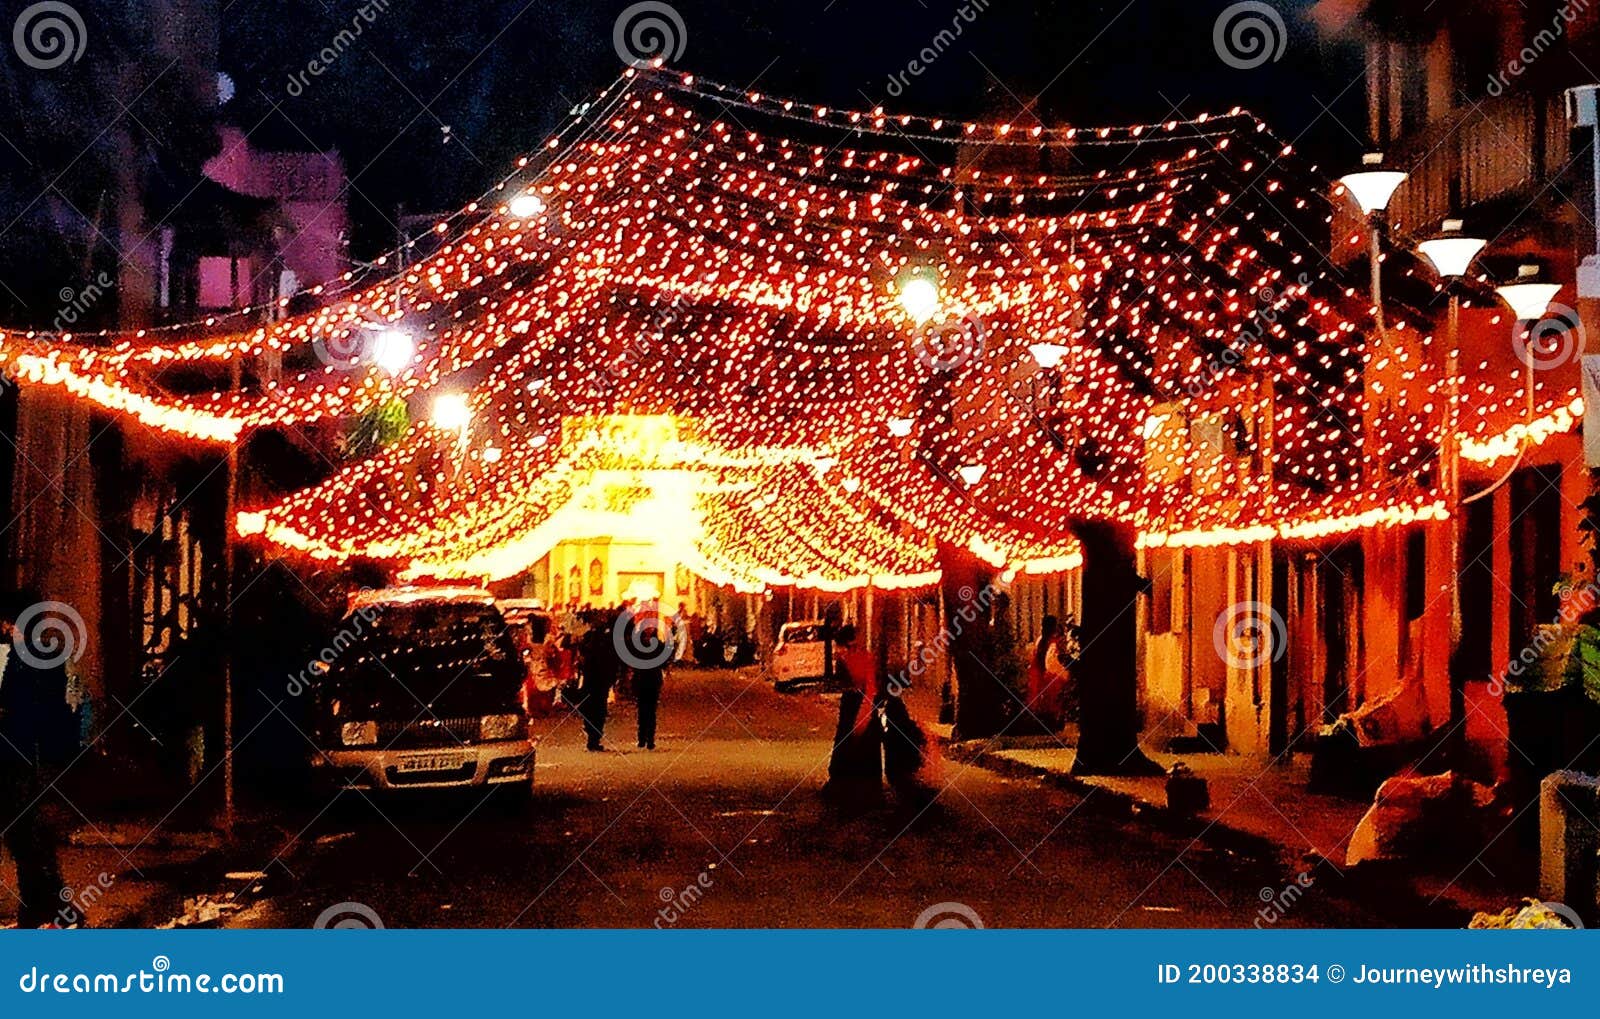 3,100 Street Light Decorations India Images, Stock Photos & Vectors |  Shutterstock